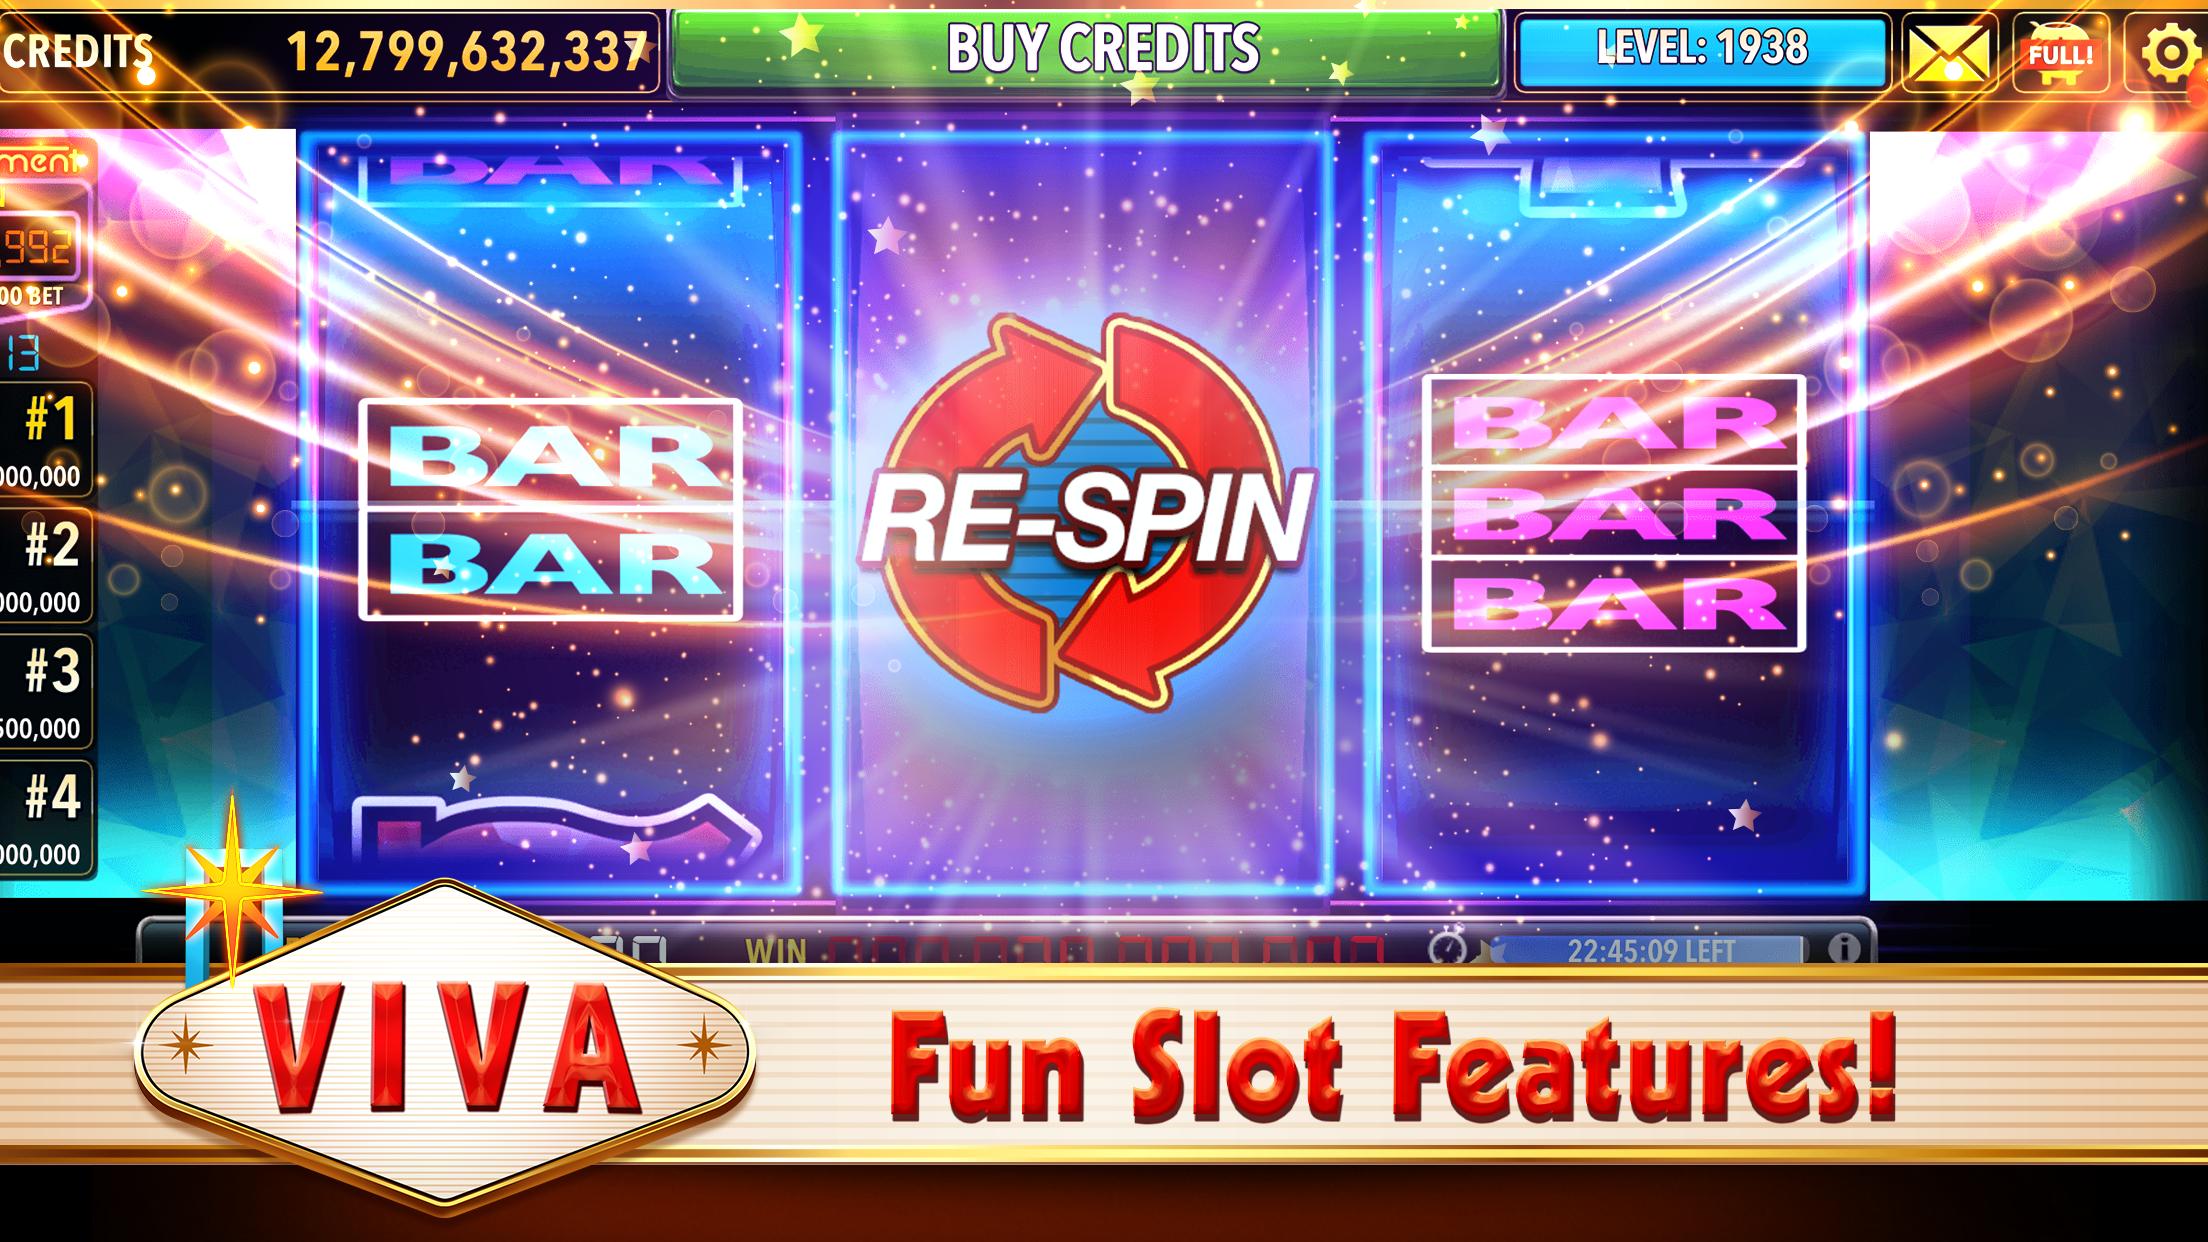 Always vegas online casino promotions